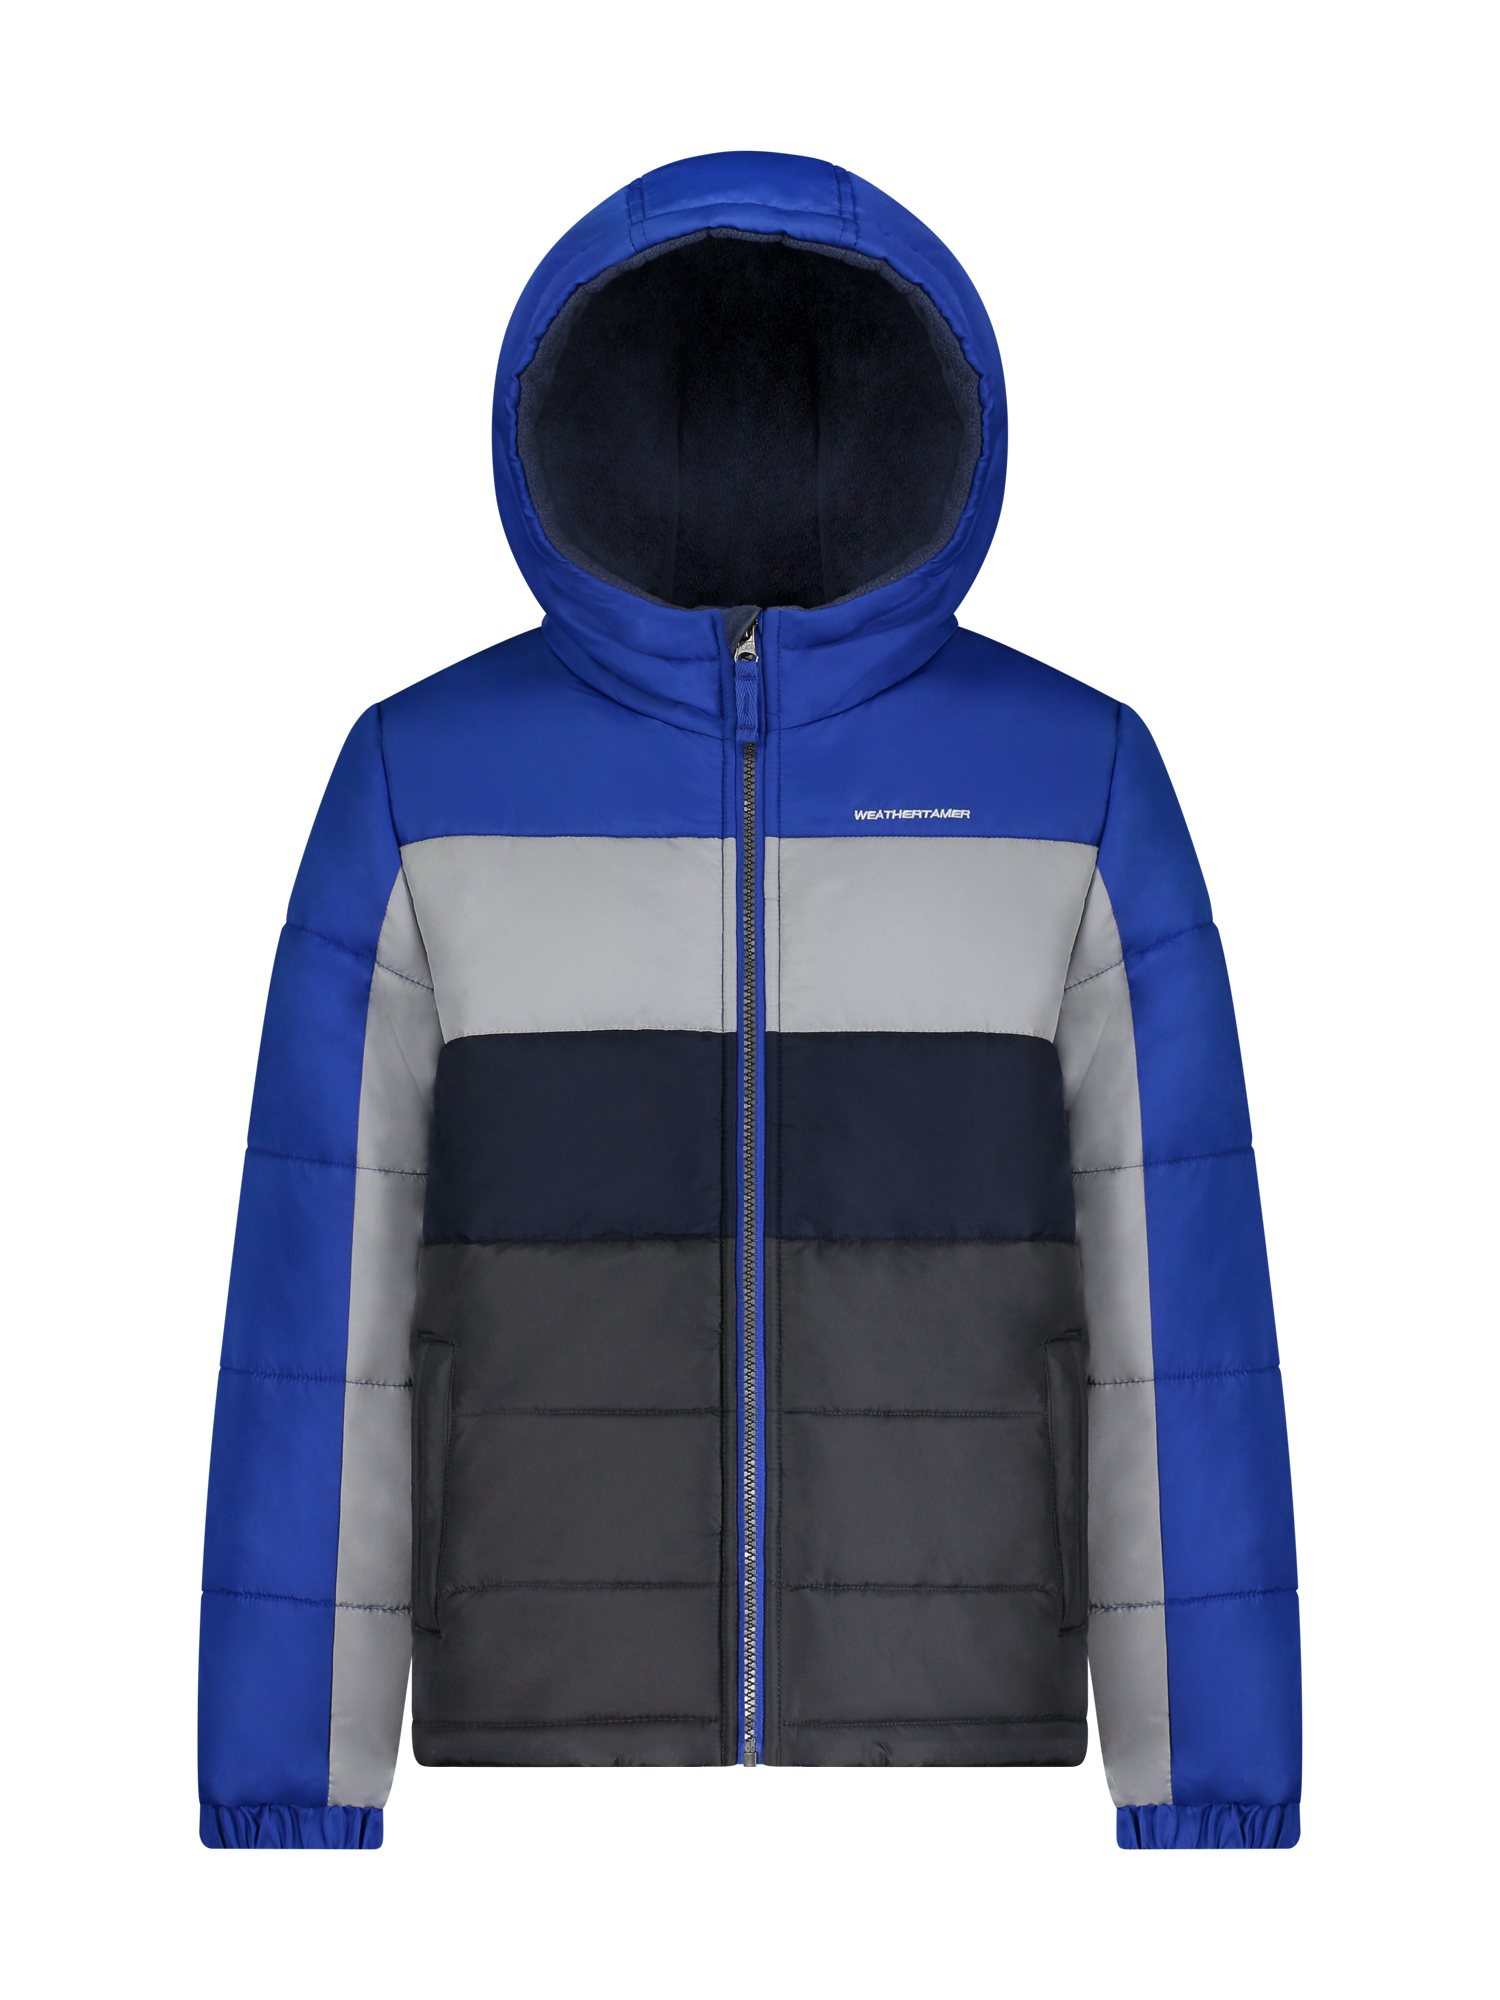 Weathertamer Boys Fleece Lined Puffer Jacket, Sizes 4-20 - image 2 of 2